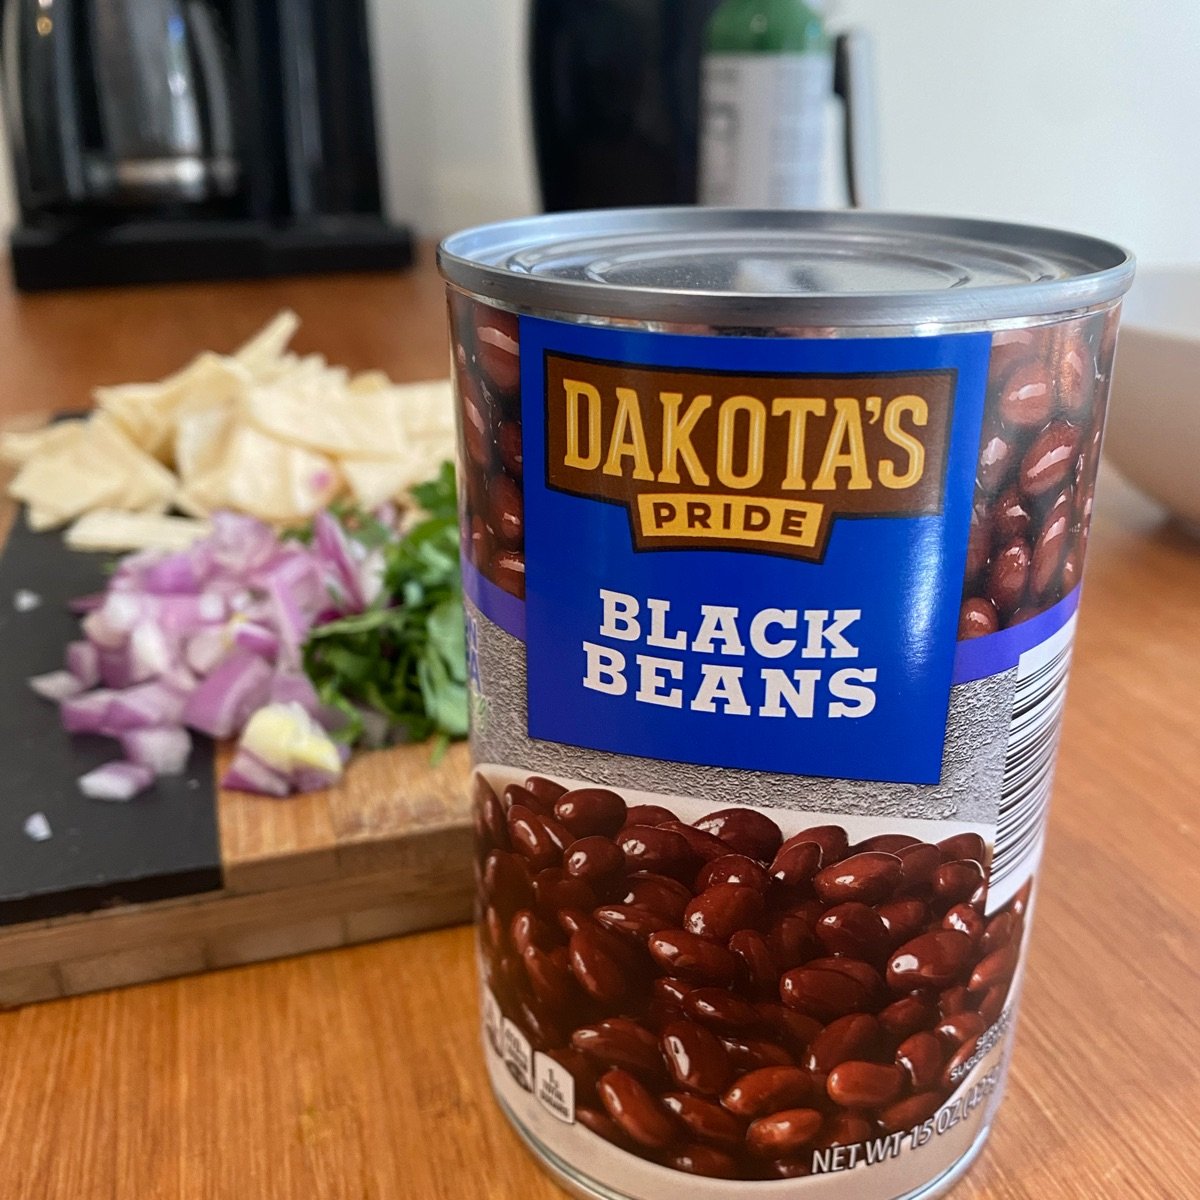 Dakota’s pride Black Beans Canned Reviews | abillion